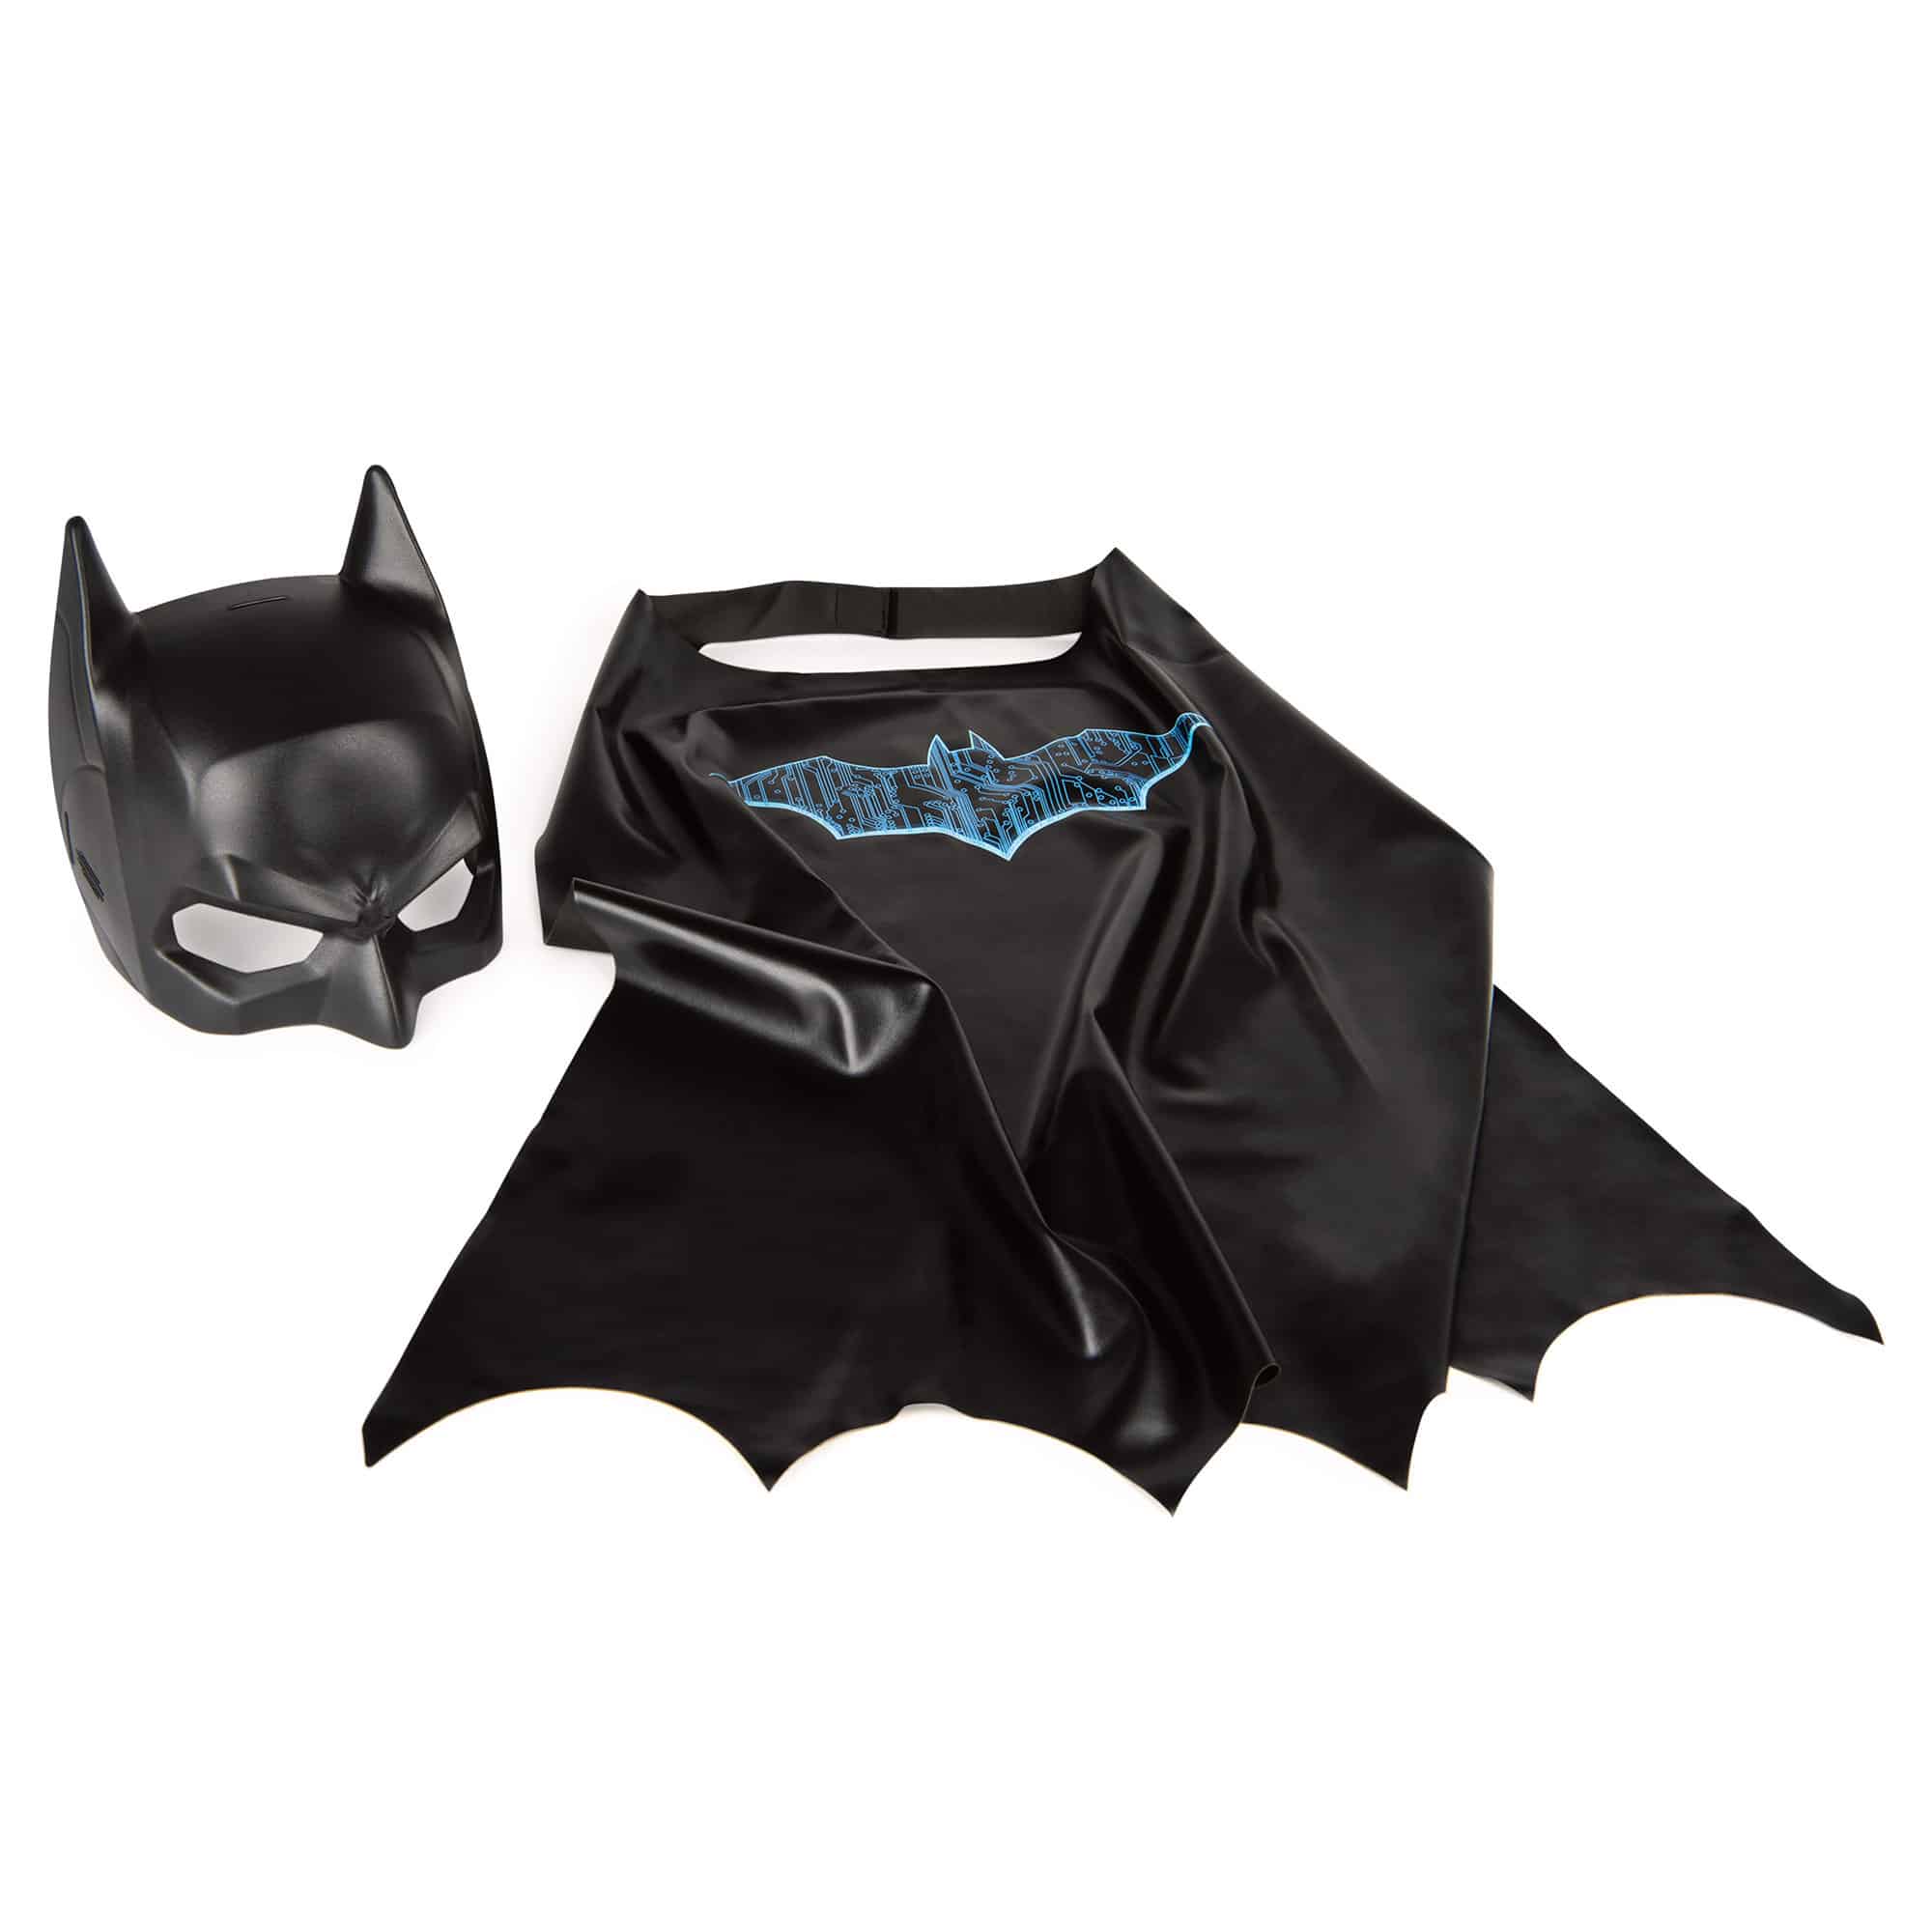 Batman - Cape & Mask Set